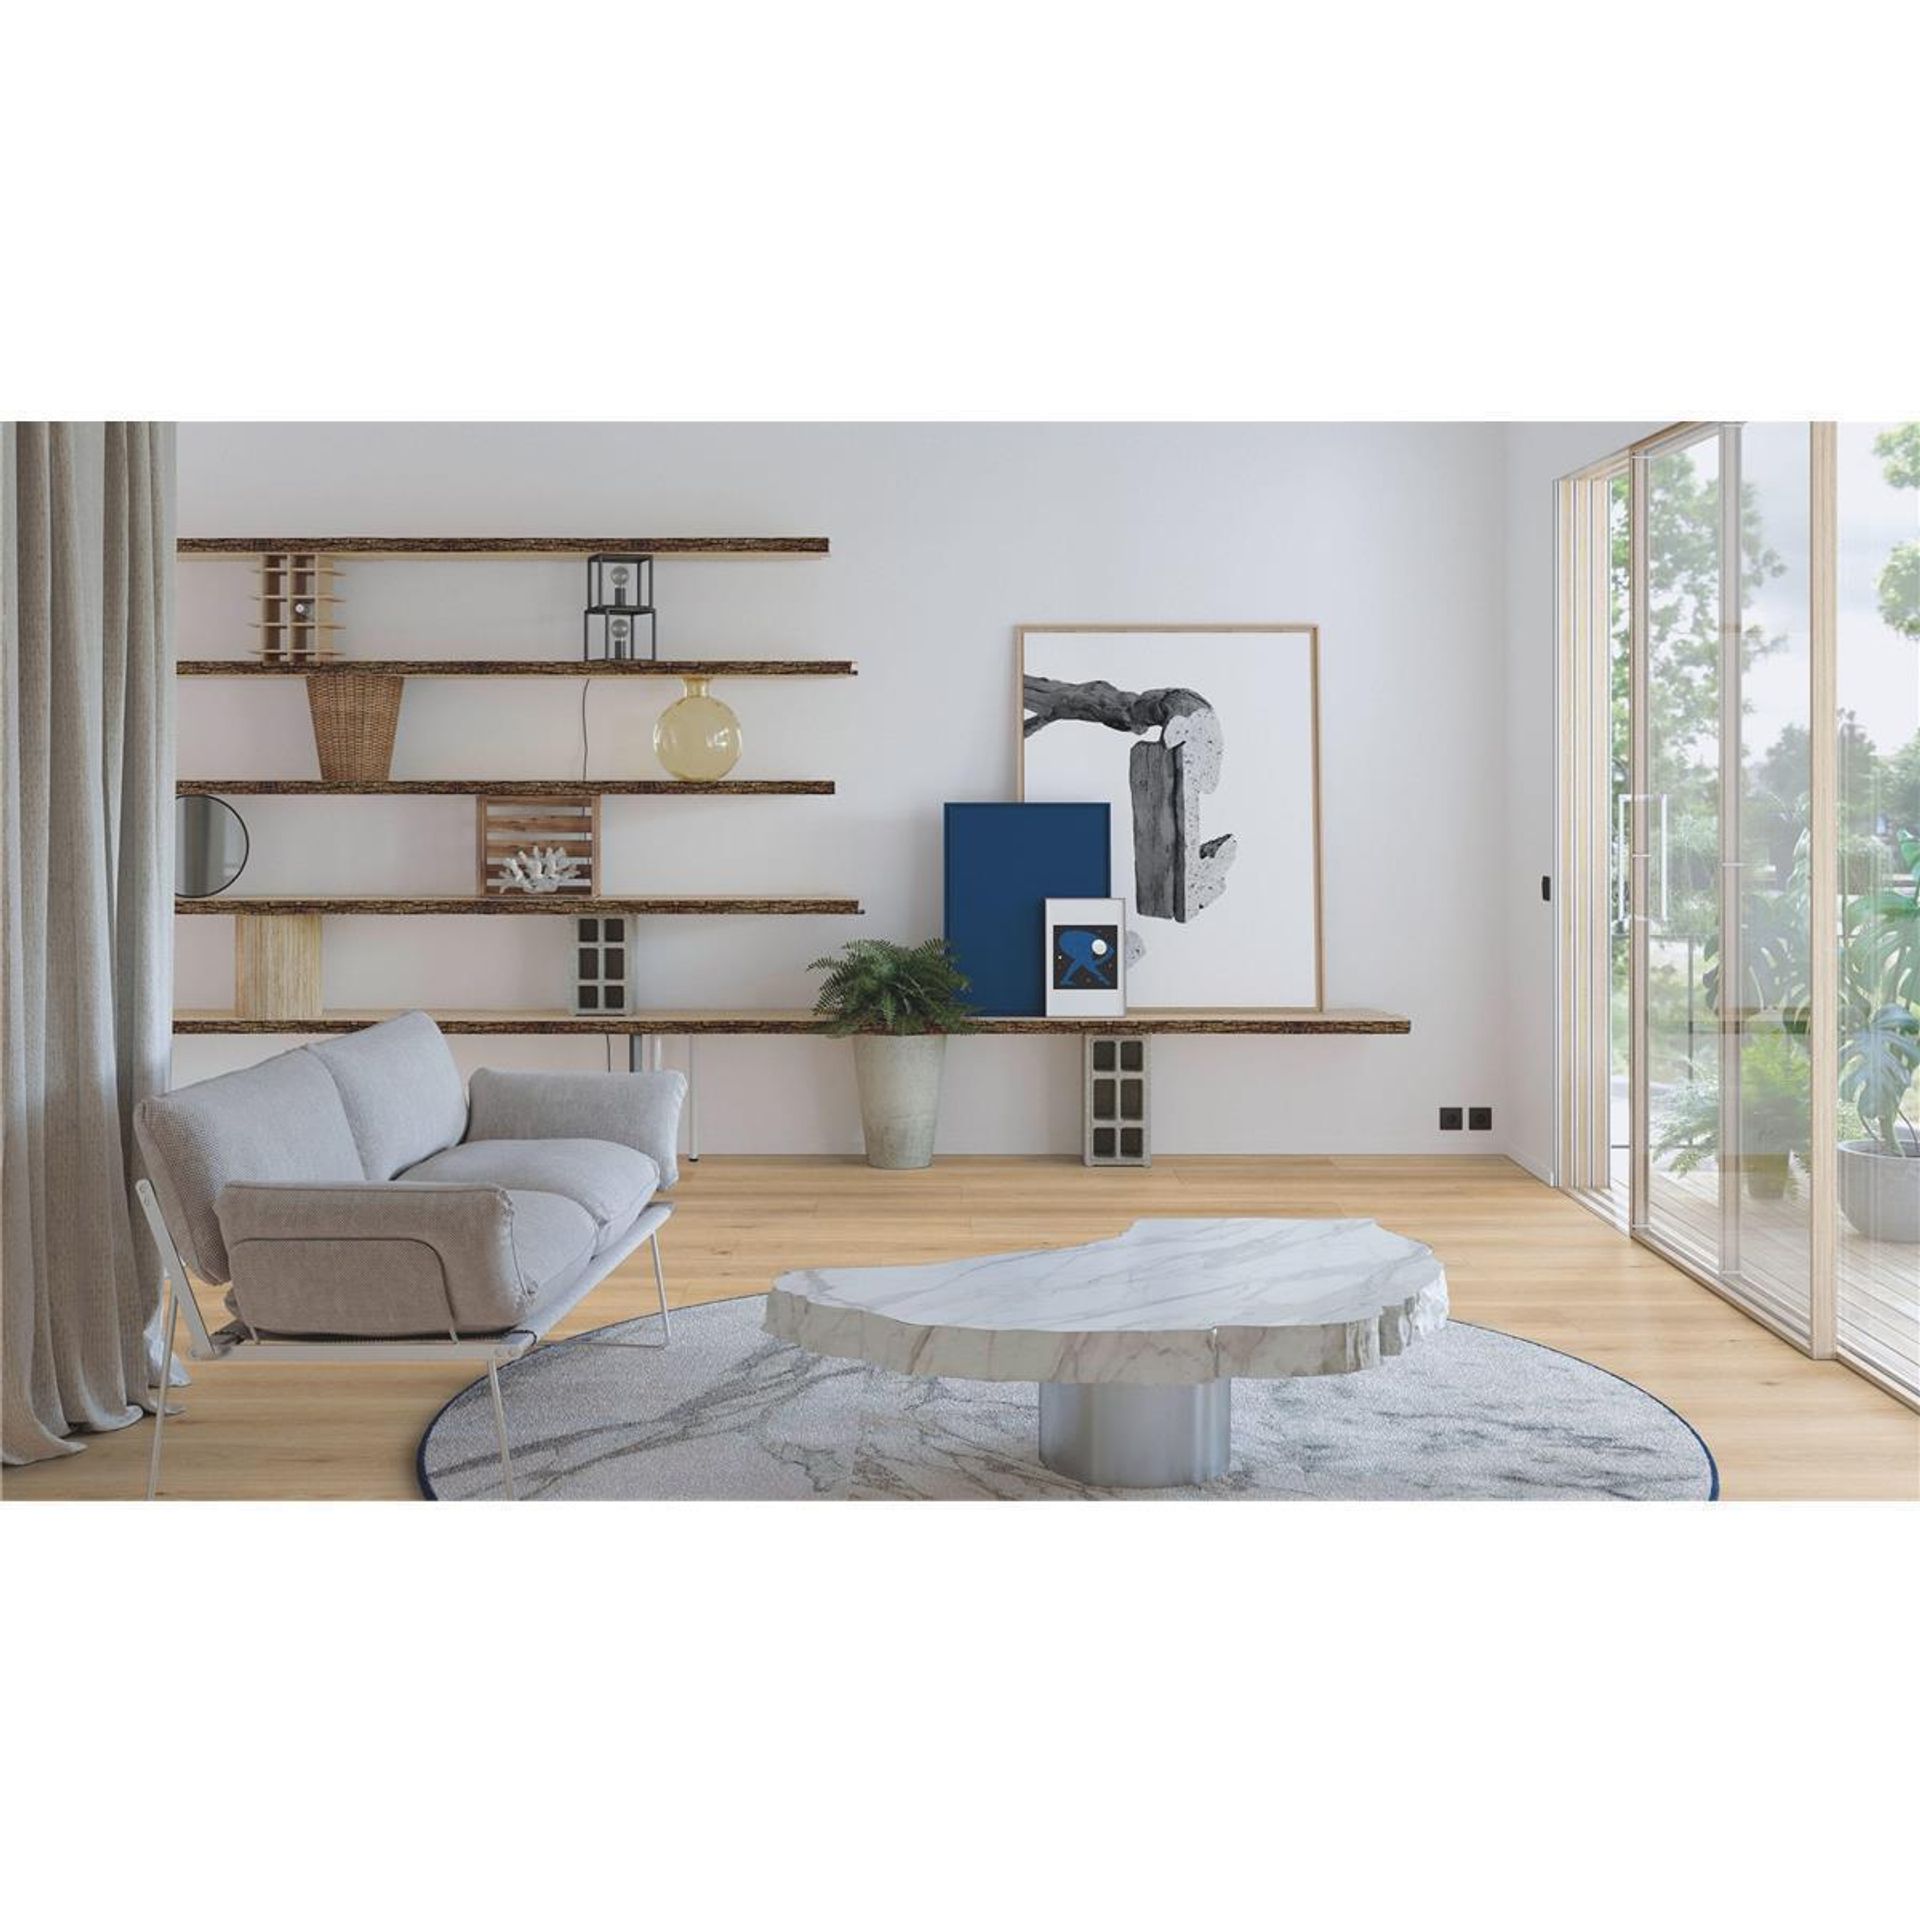 Designboden CLASSICS-Contemporary Oak-Grege Planke 149,1 cm x 24,05 cm - Nutzschichtdicke 0,30 mm